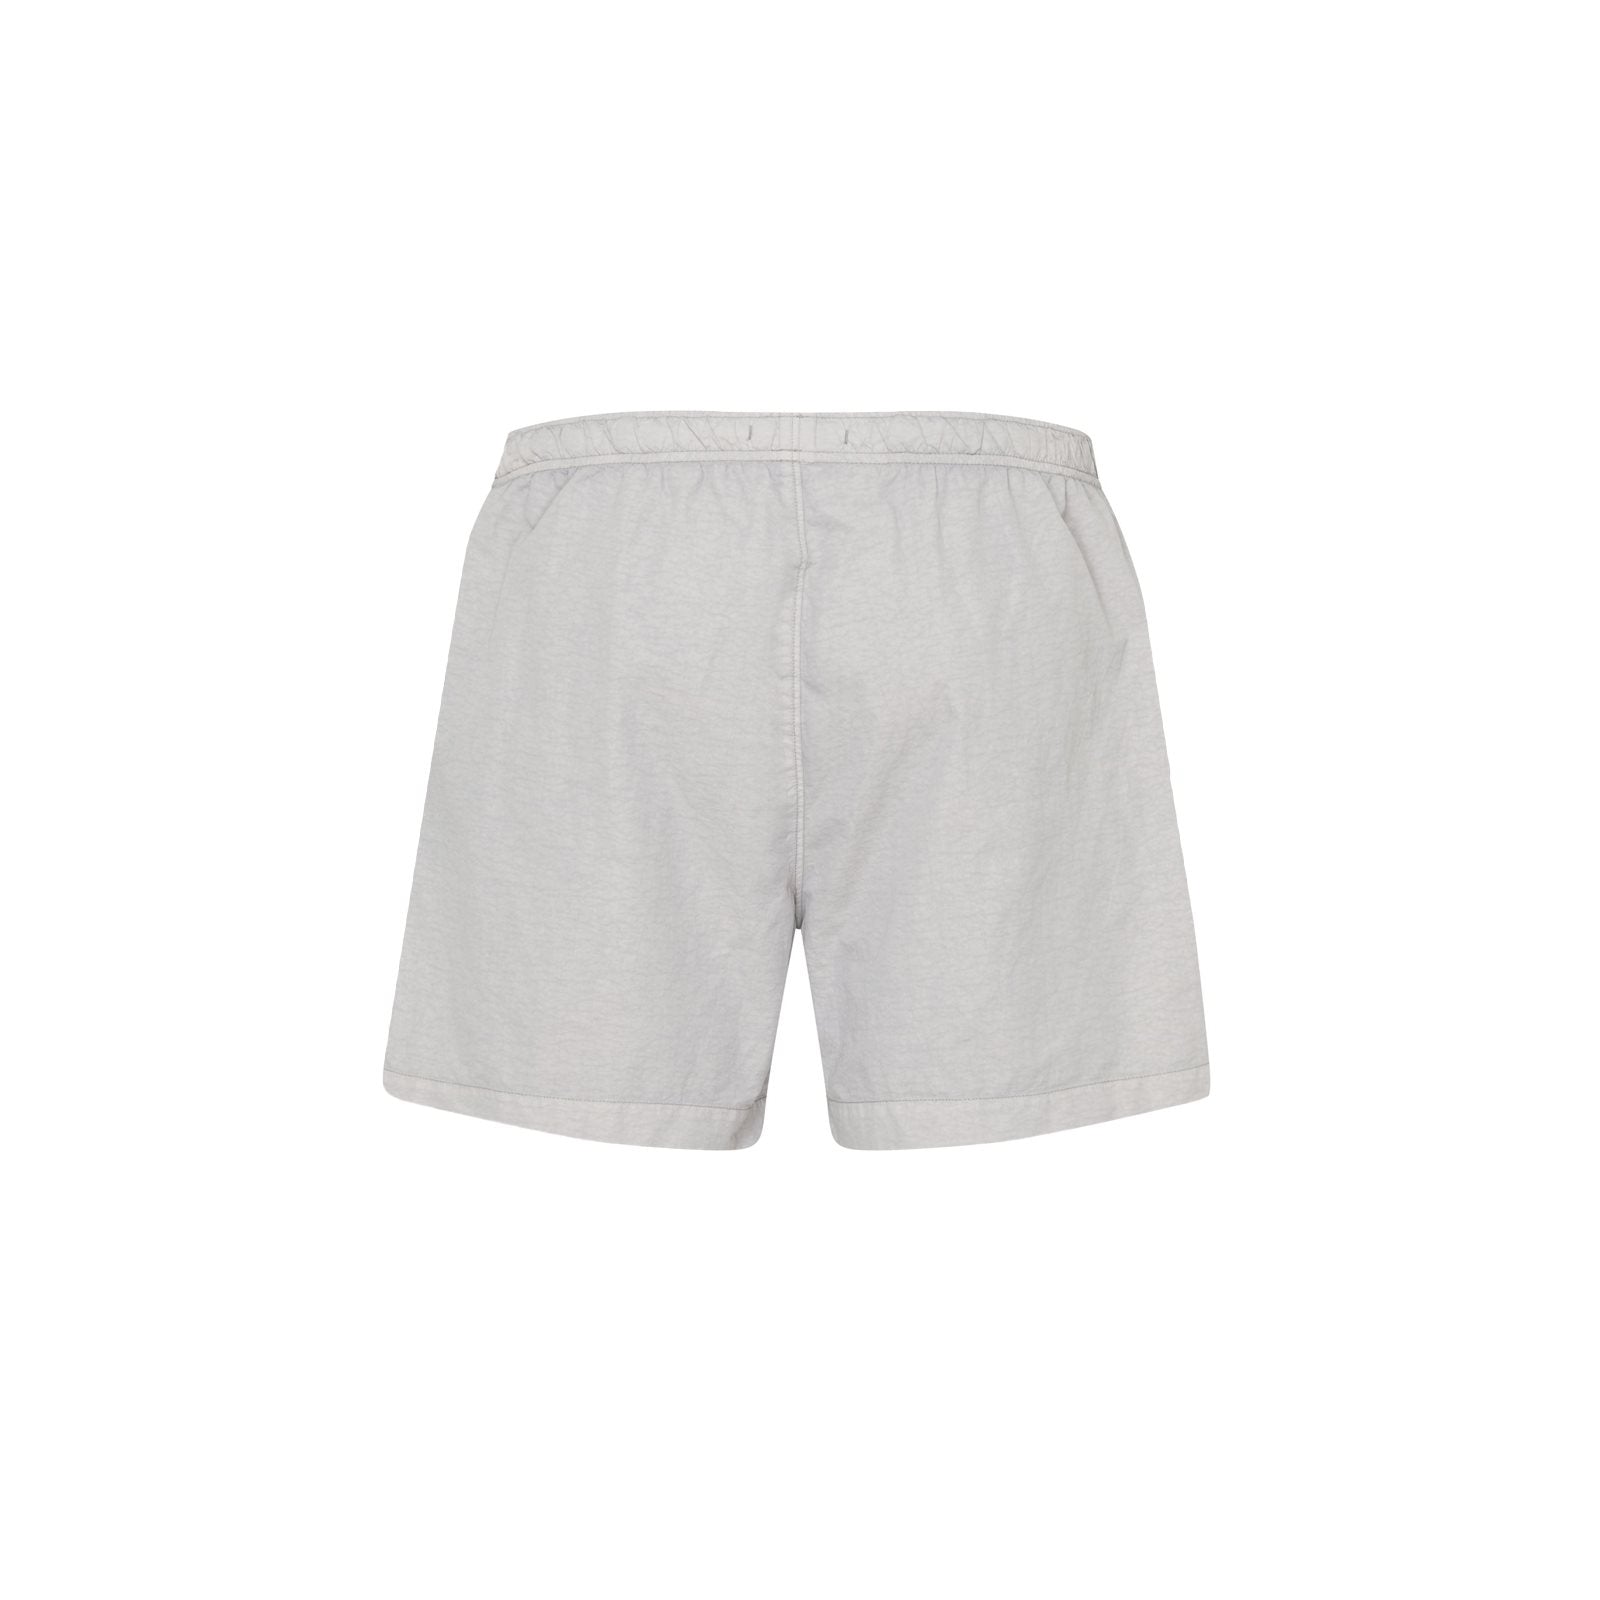 Flat nylon swim shorts